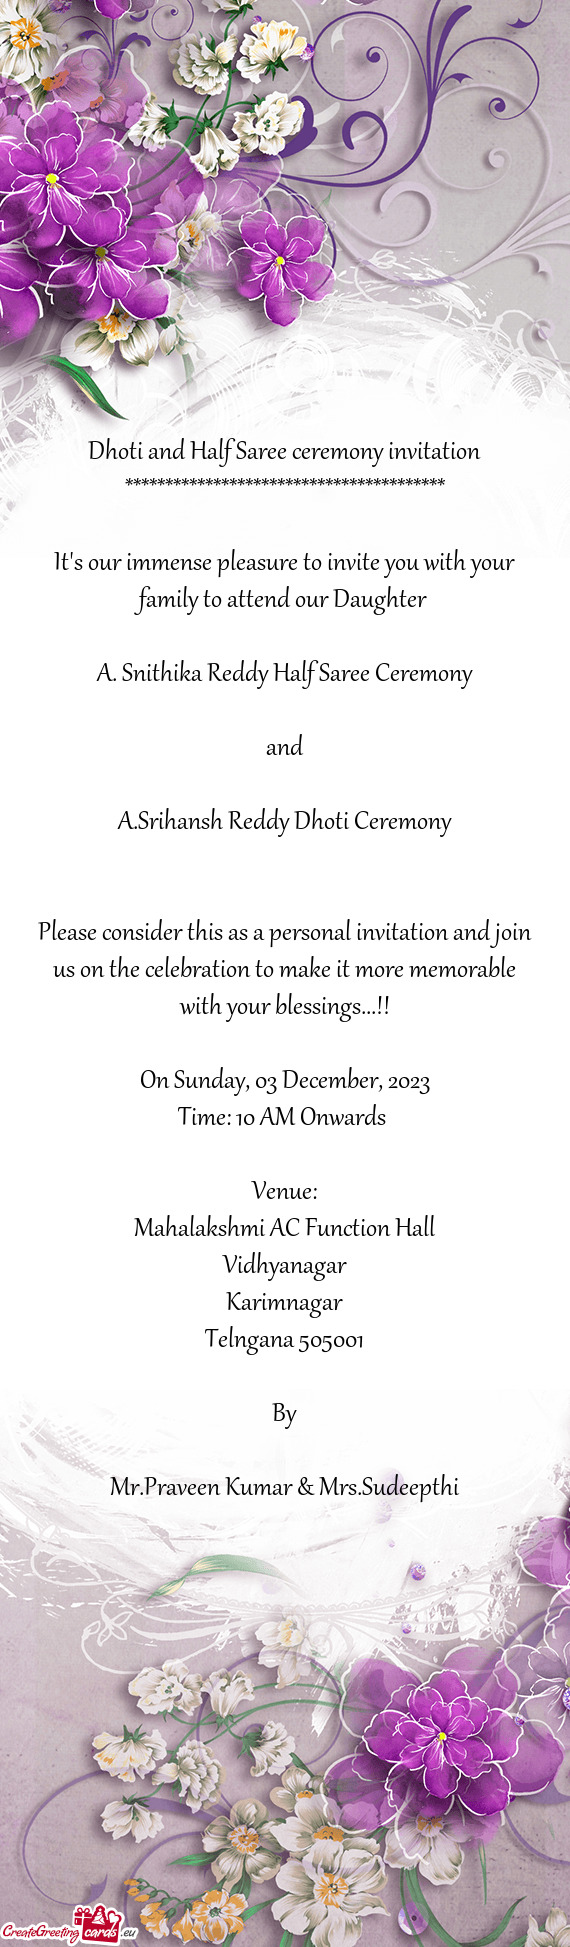 A. Snithika Reddy Half Saree Ceremony